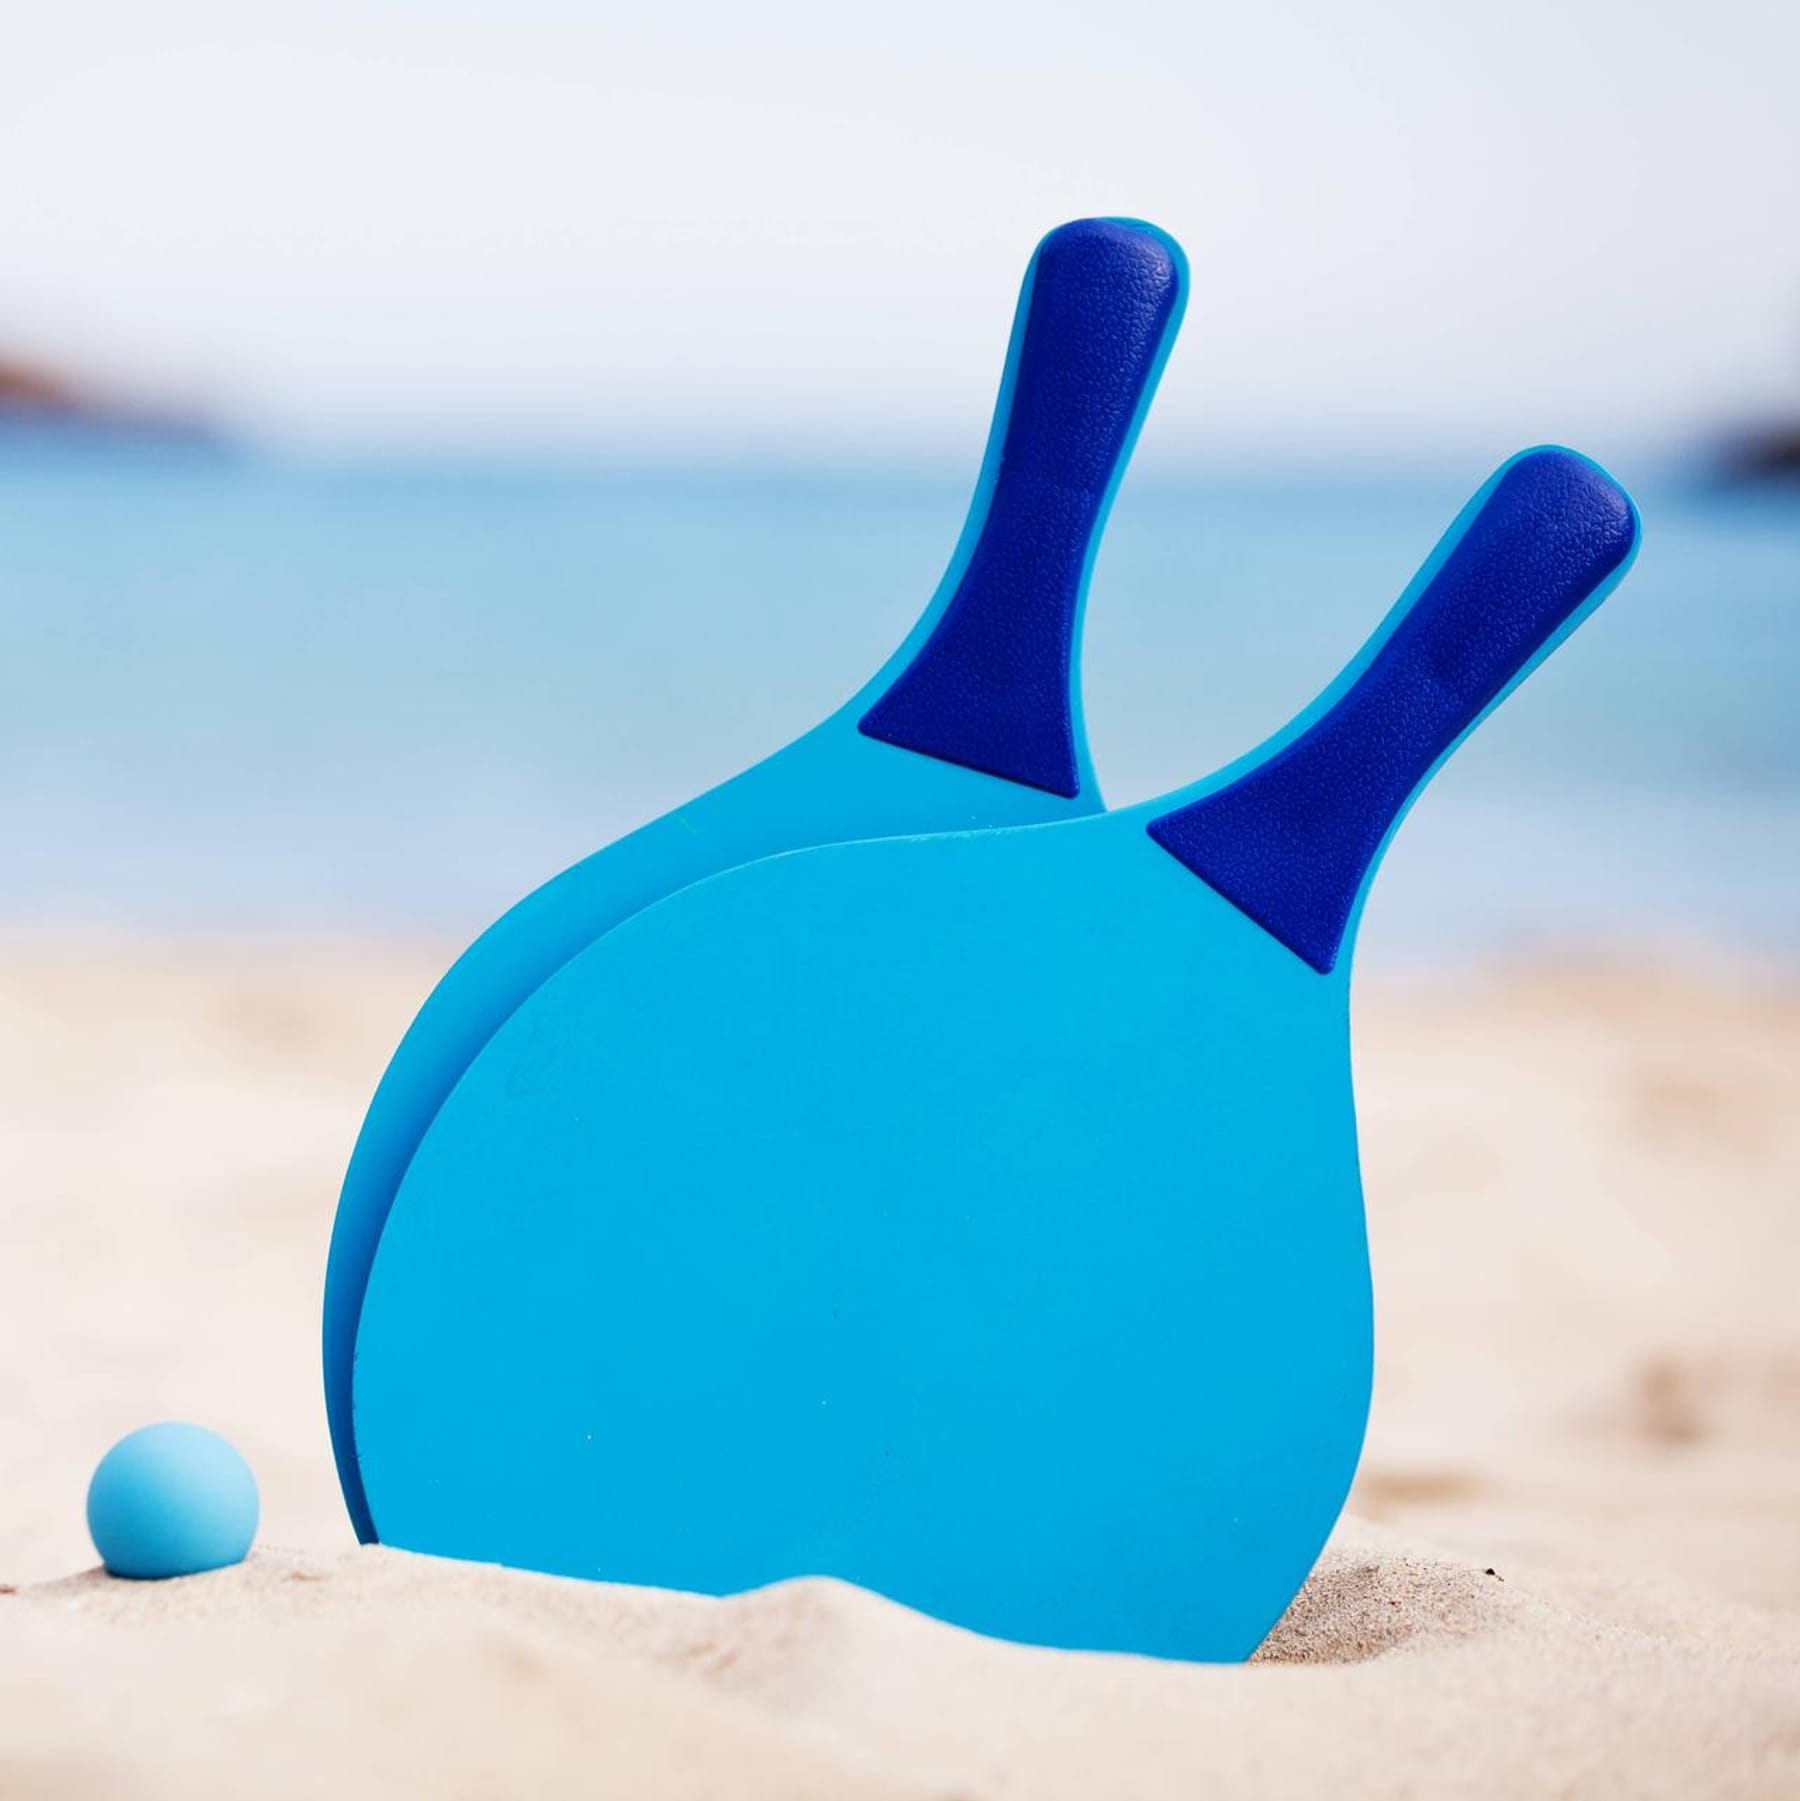 Ping Pong: Beachball ist der Klassiker unter den Strandspielen